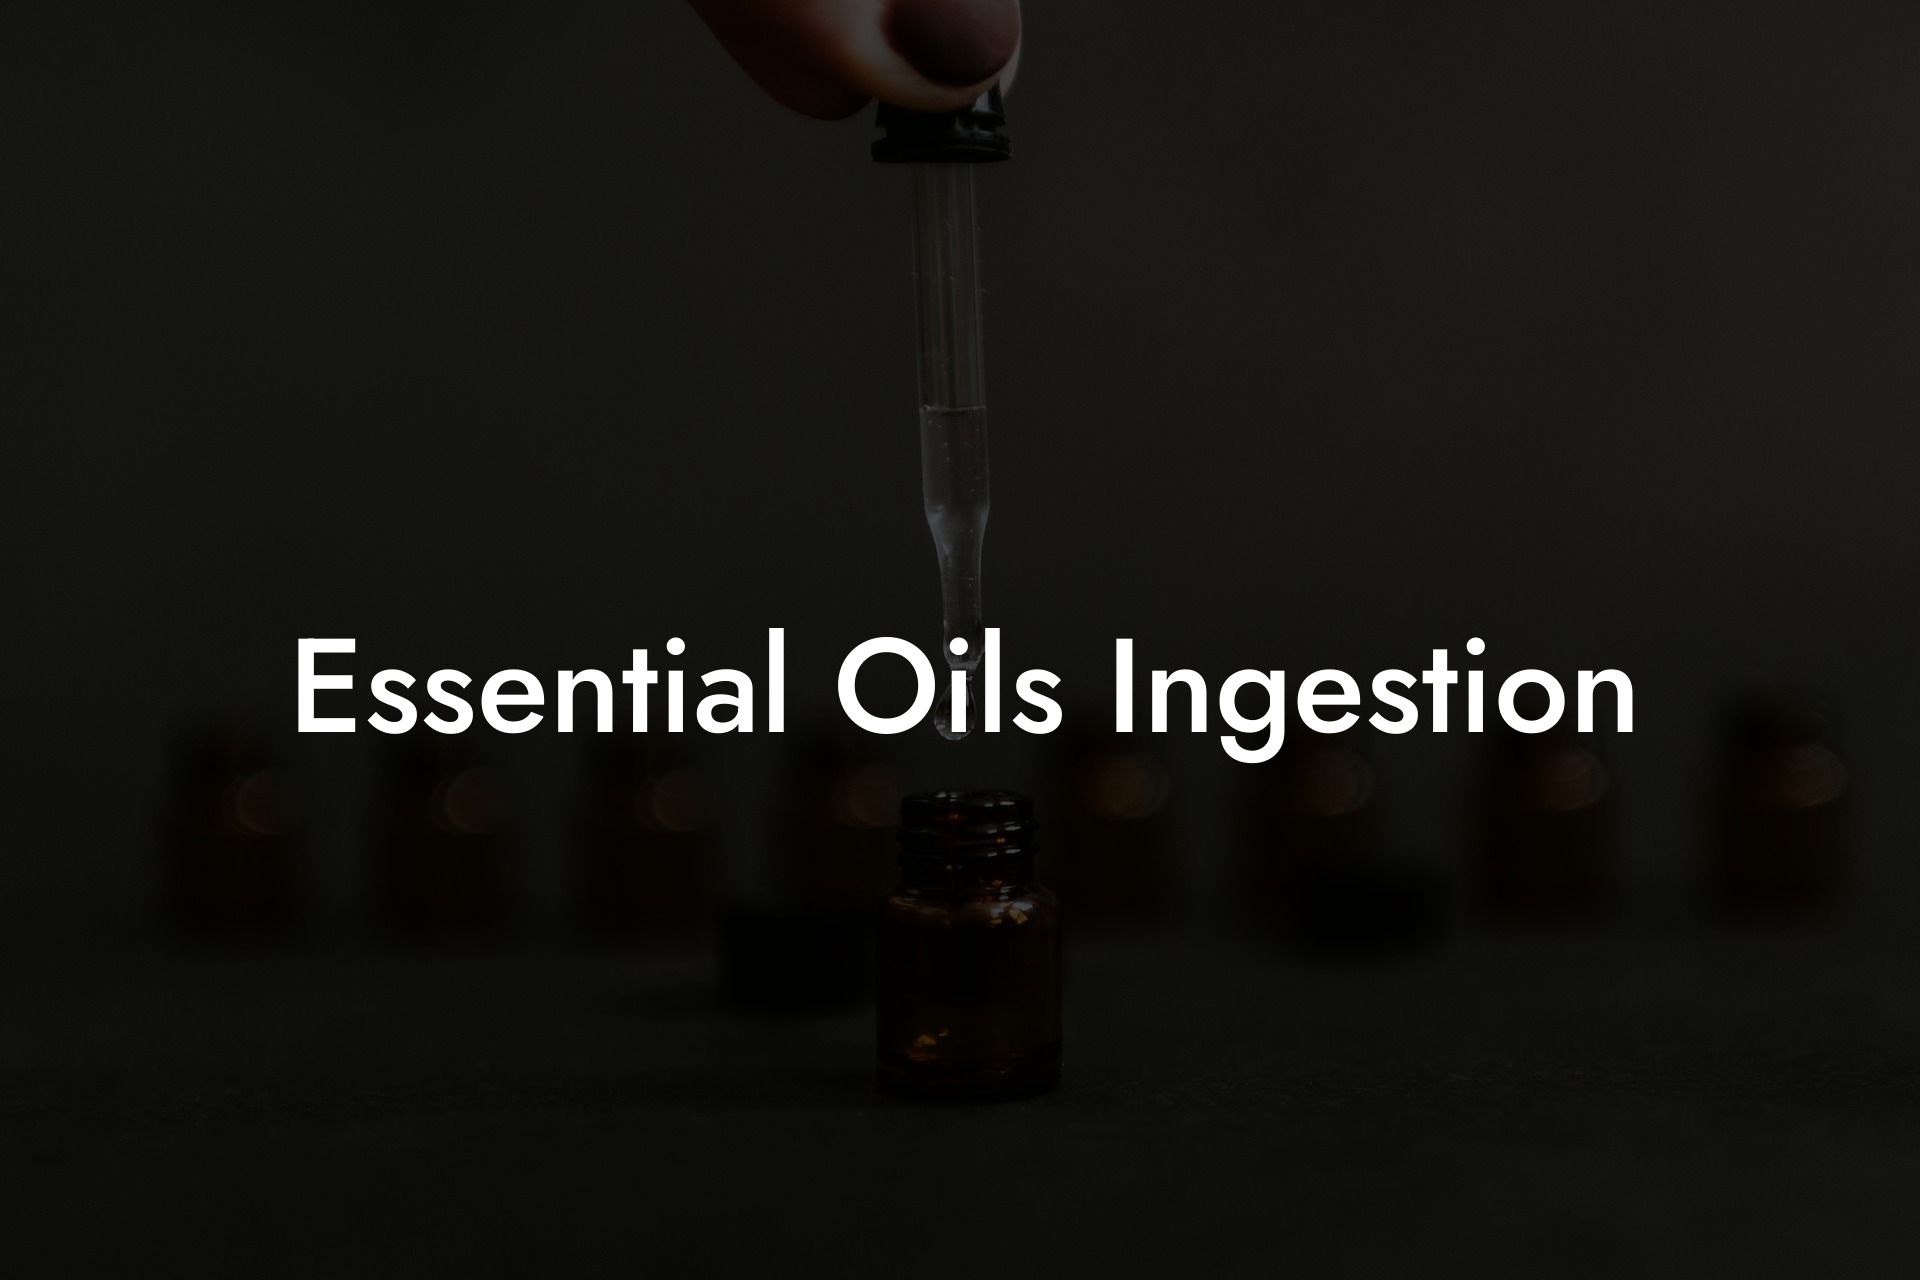 Essential Oils Ingestion